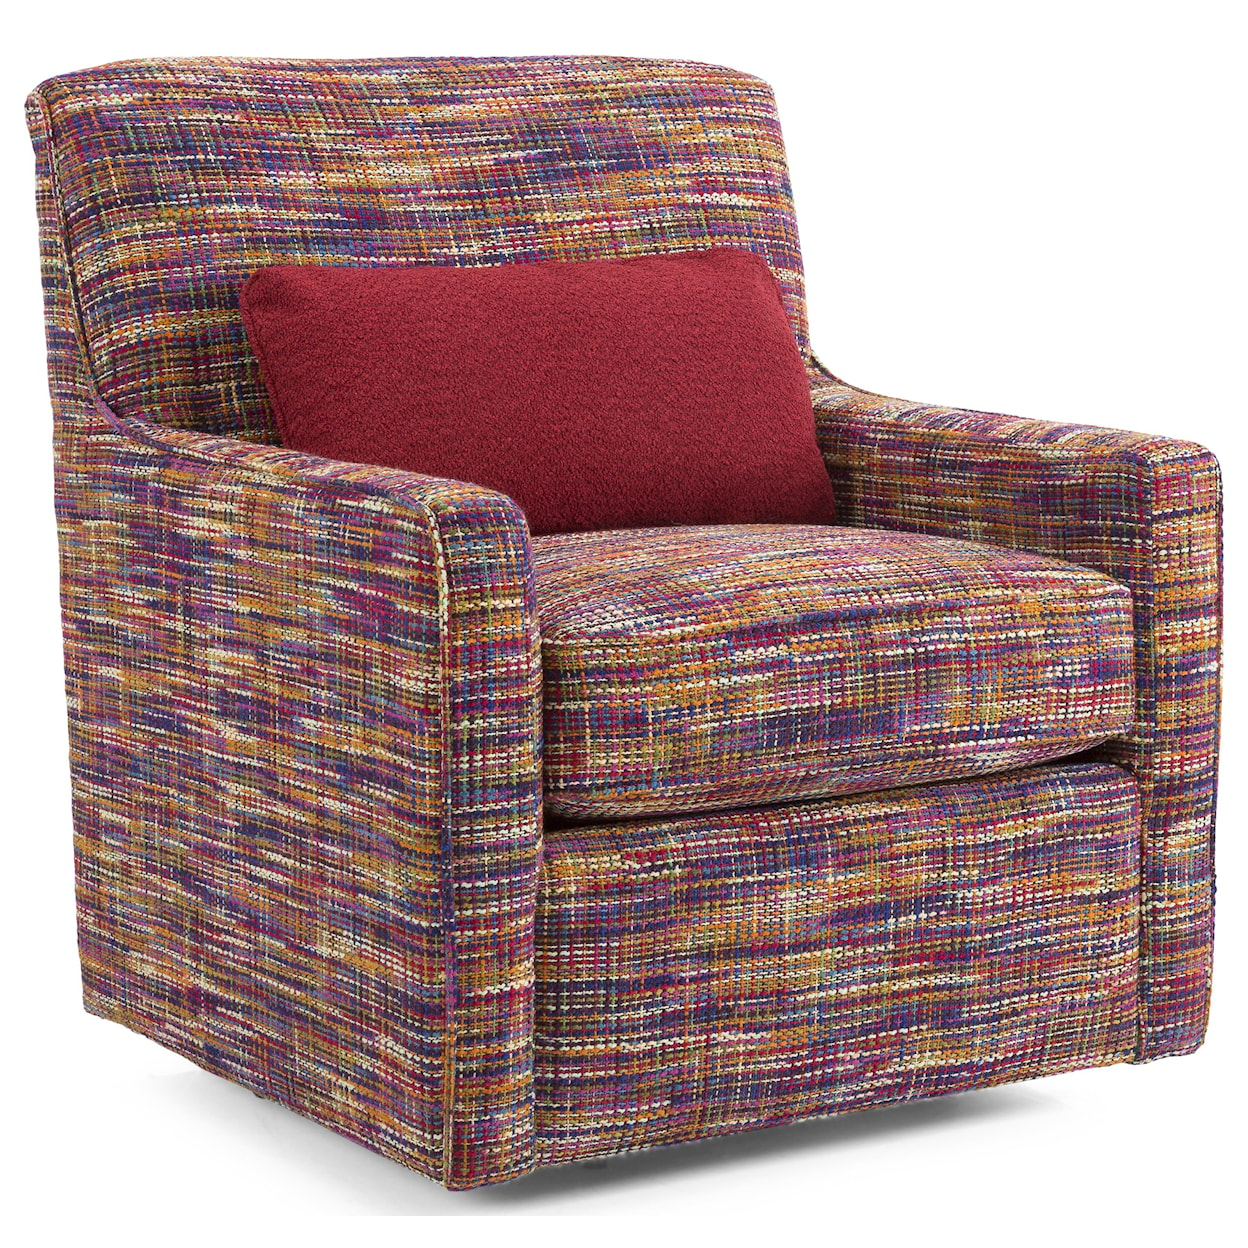 Taelor Designs Kyden Swivel Chair